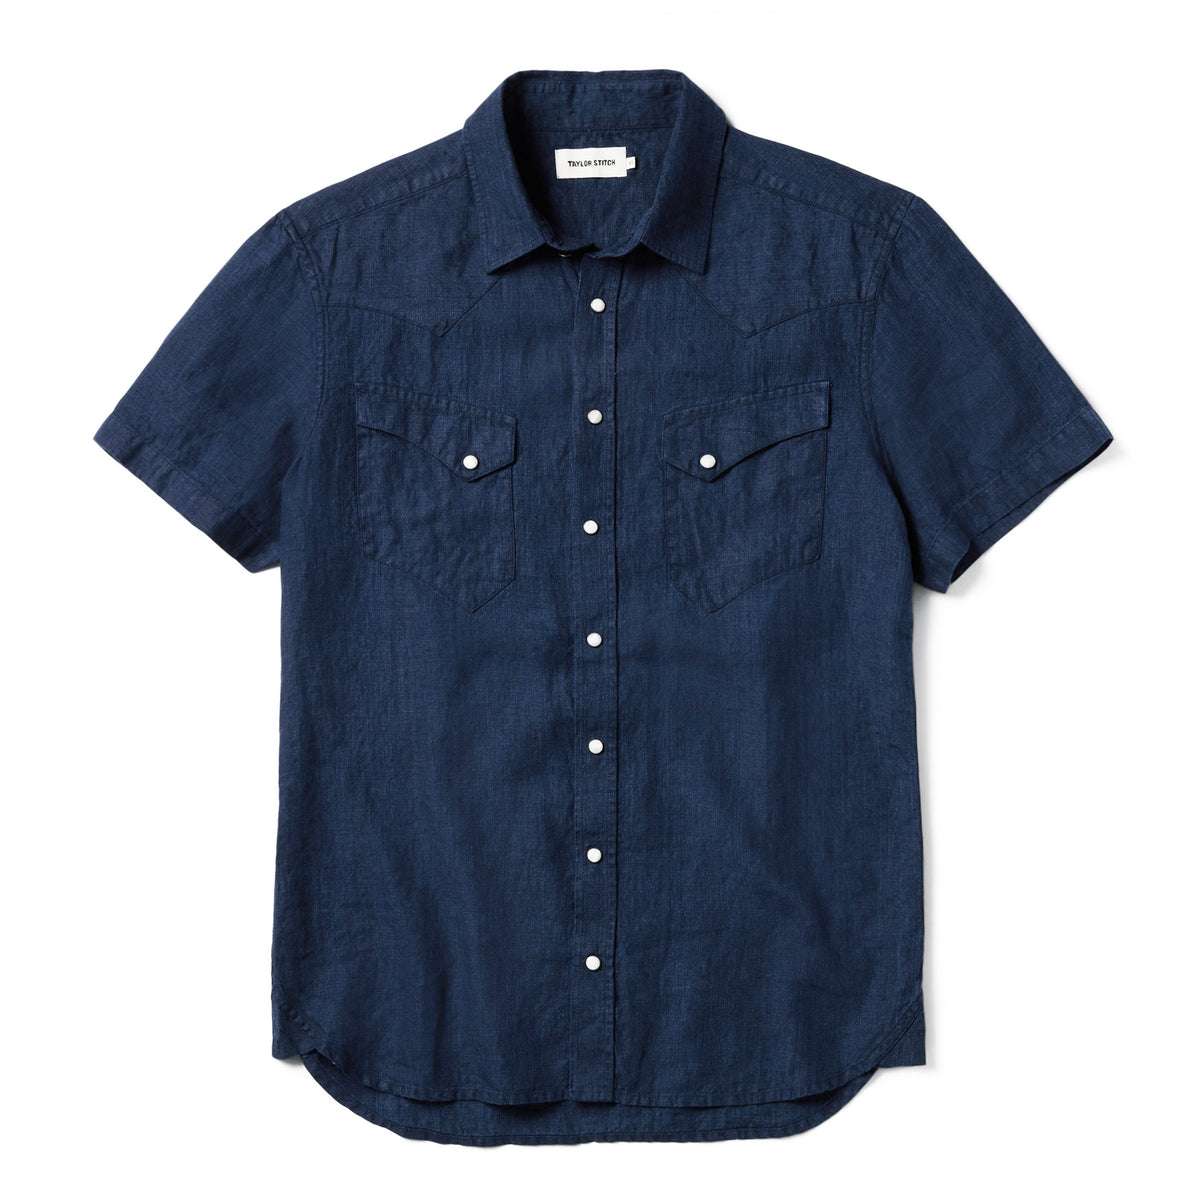 Men's Essentials - Oxford Shirts, Pants, Tees & More | Taylor Stitch